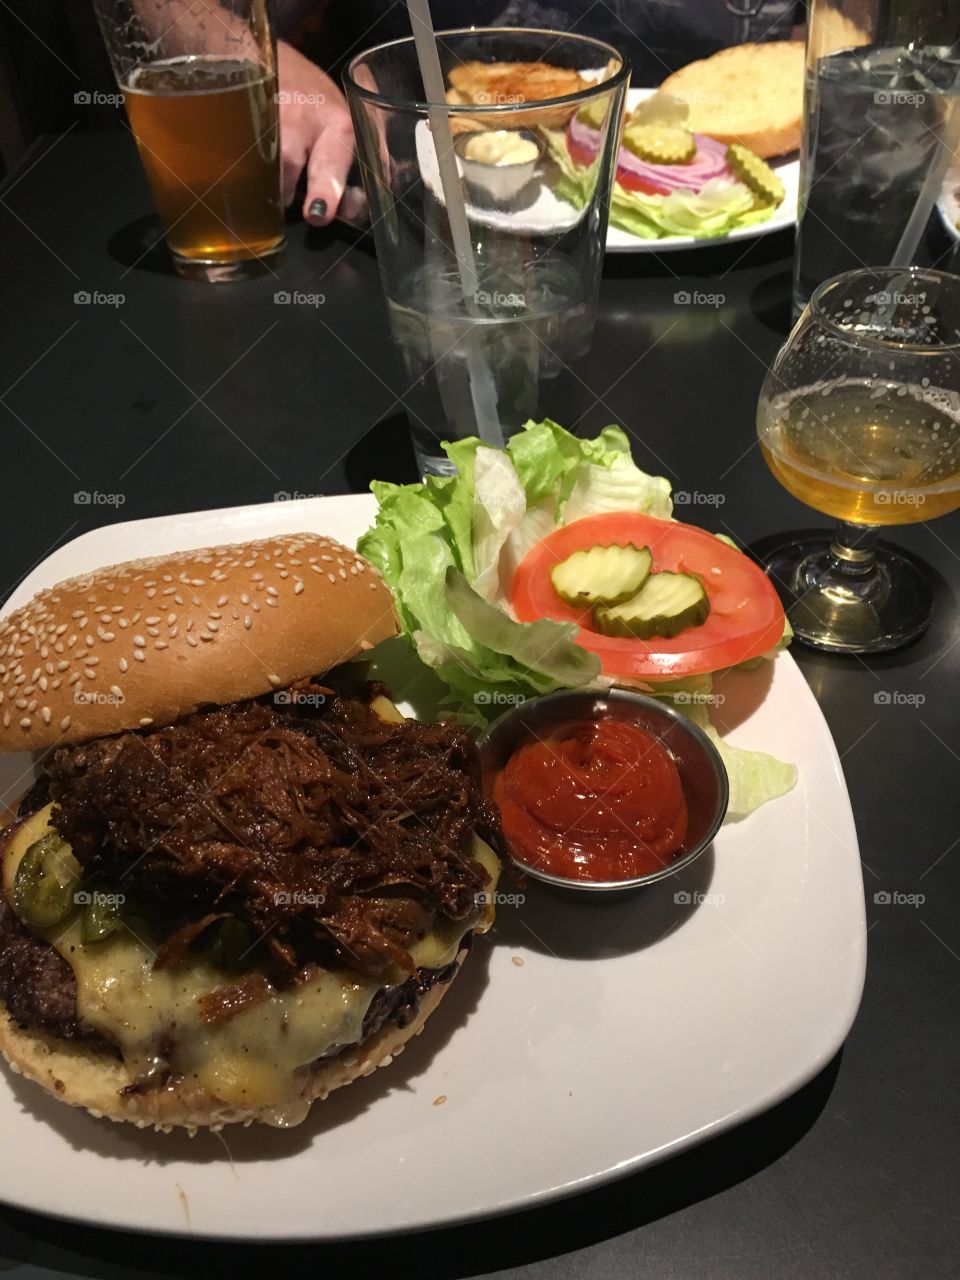 A delicious burger in Breckenridge